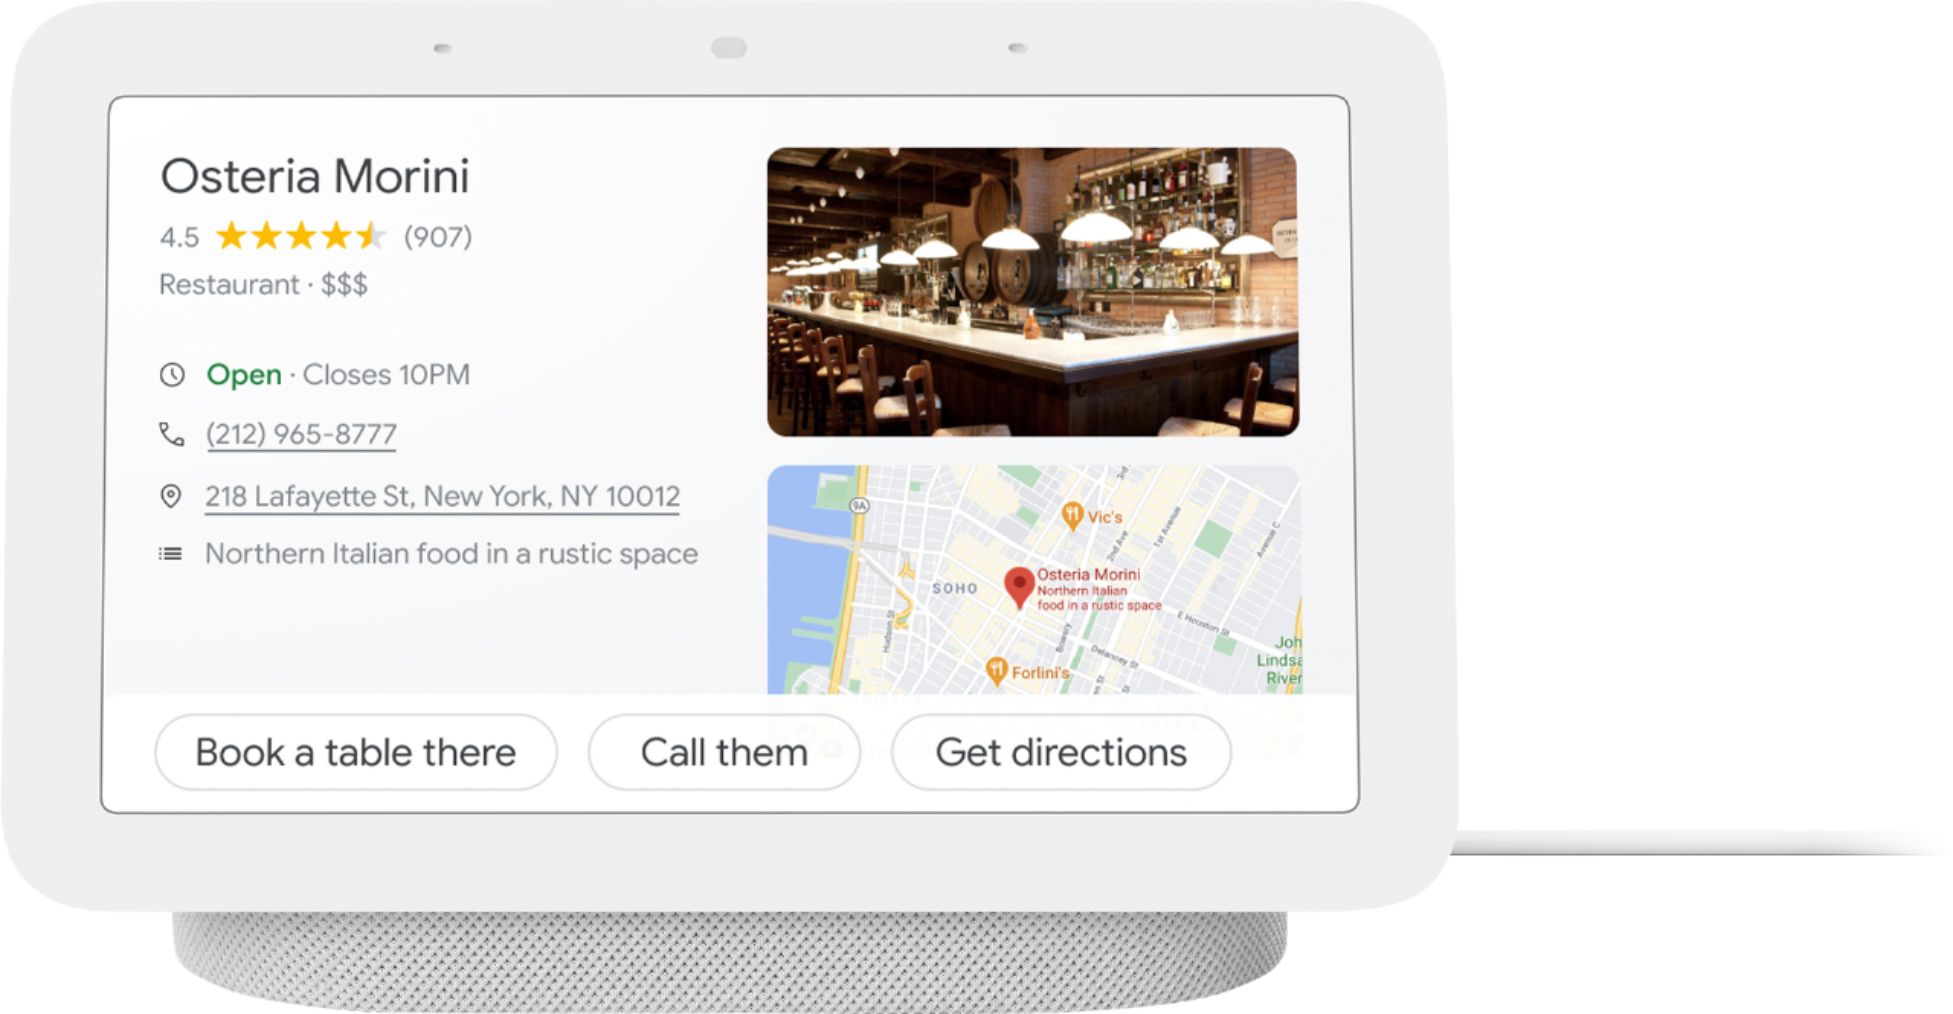  Google Nest Hub 7” Smart Display with Google Assistant